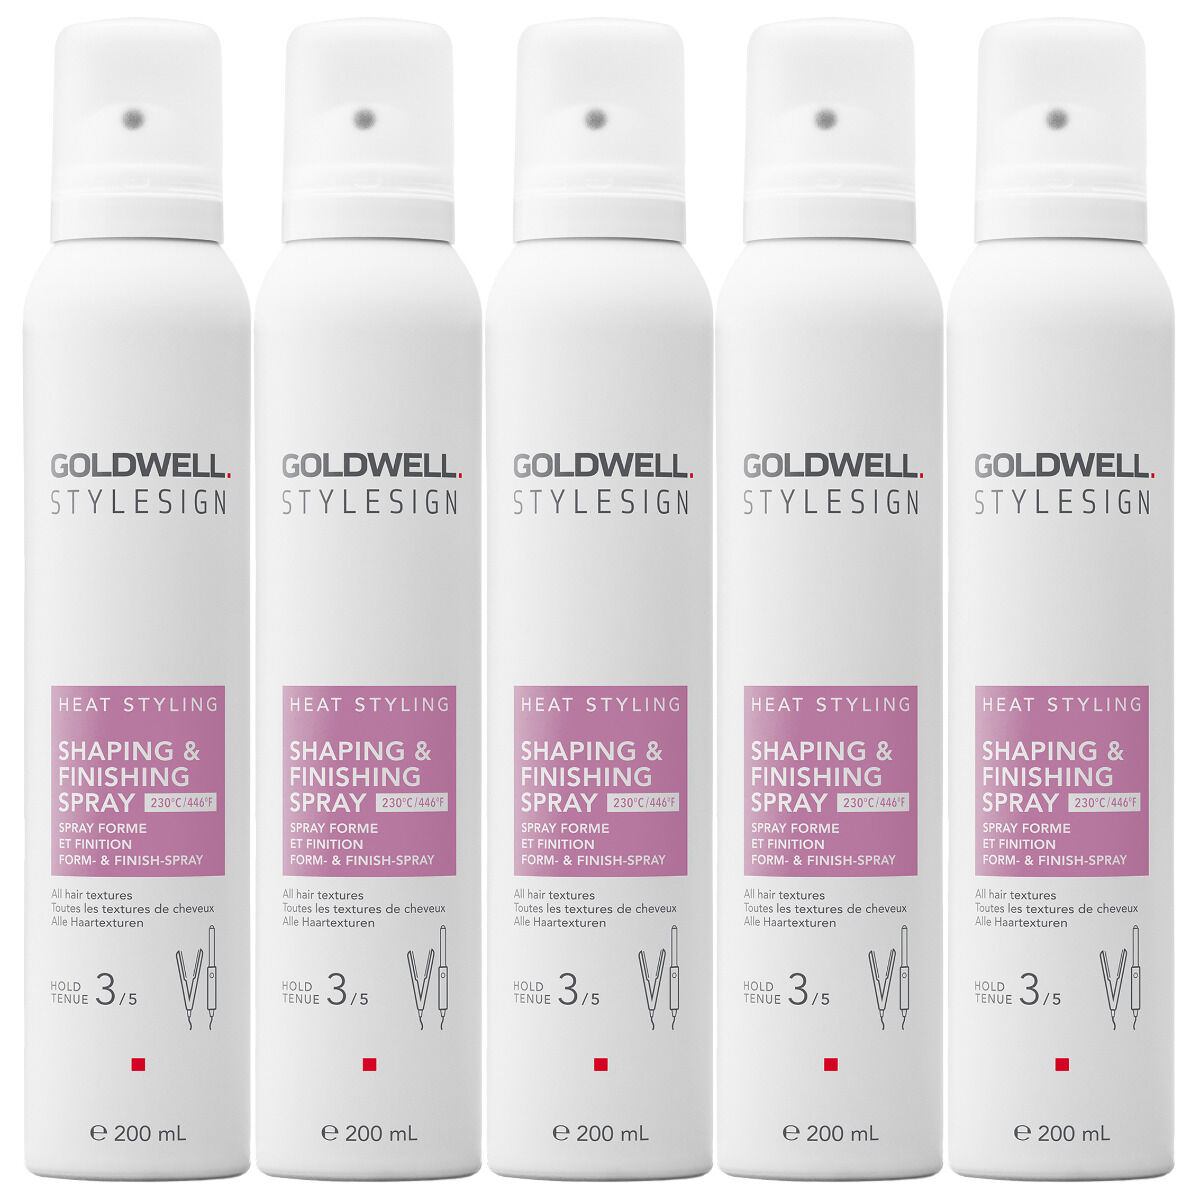 Afbeelding van 10x Goldwell StyleSign StyelSign Shaping & Finishing Spray 200ml - Goldwell bundel/set/pakket